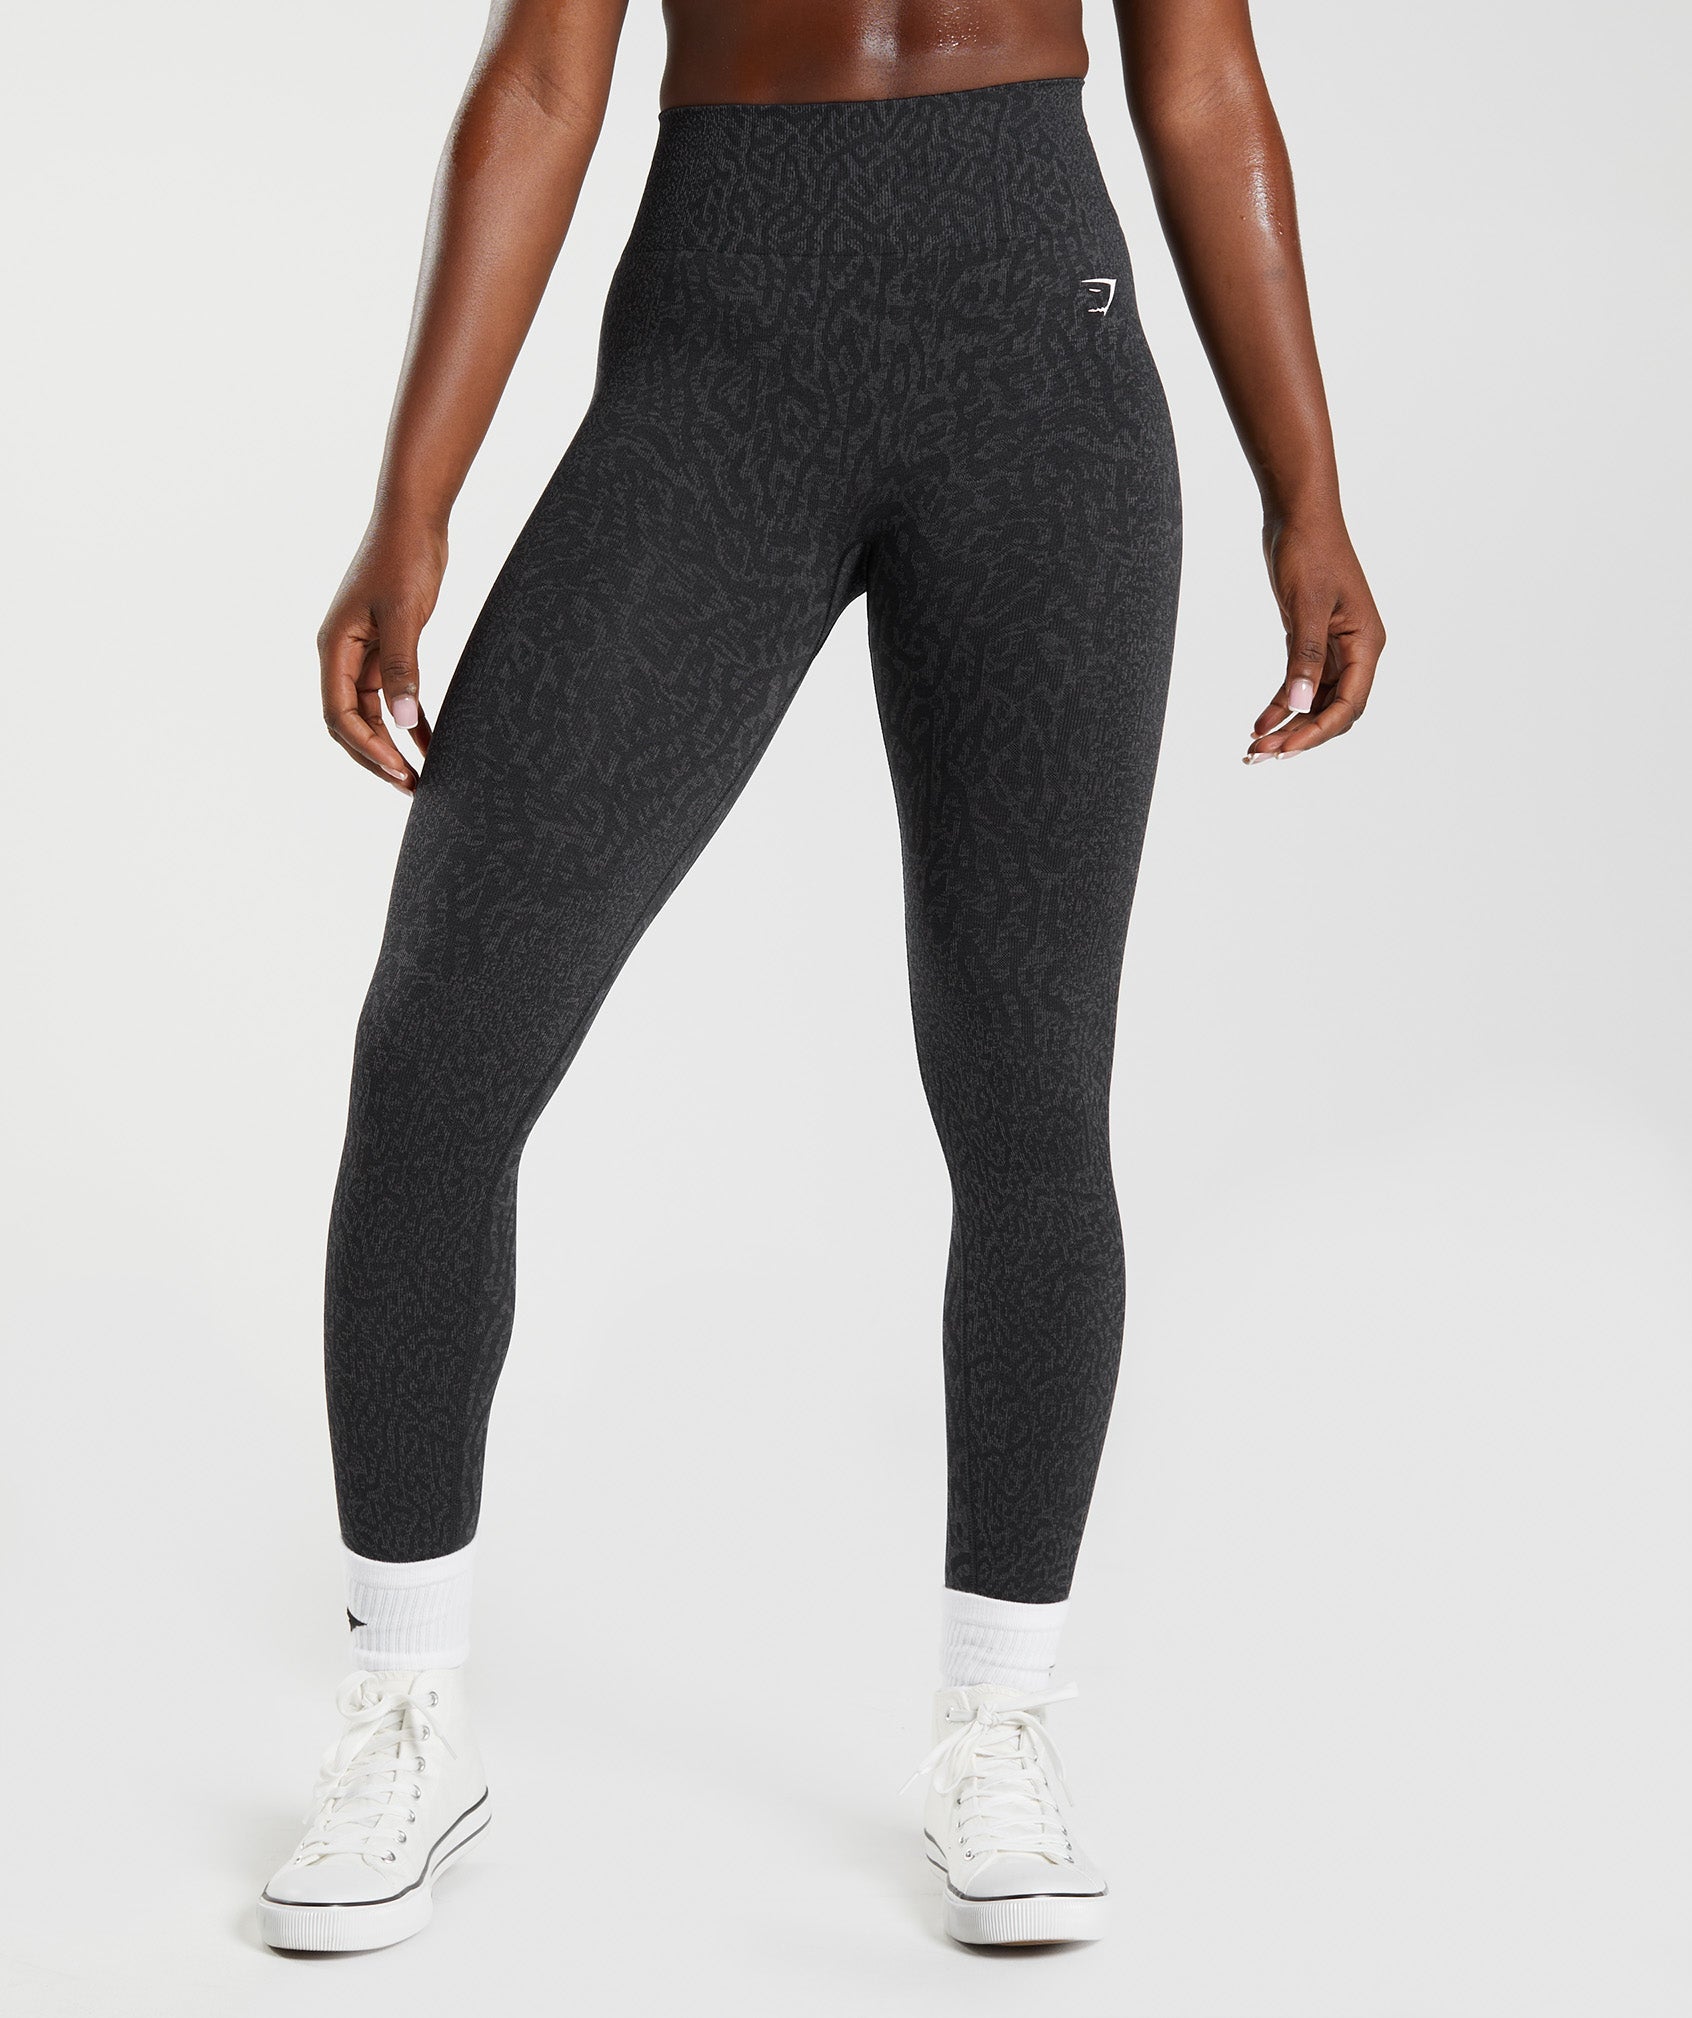 dark grey gymshark leggings - OFF-67% >Free Delivery